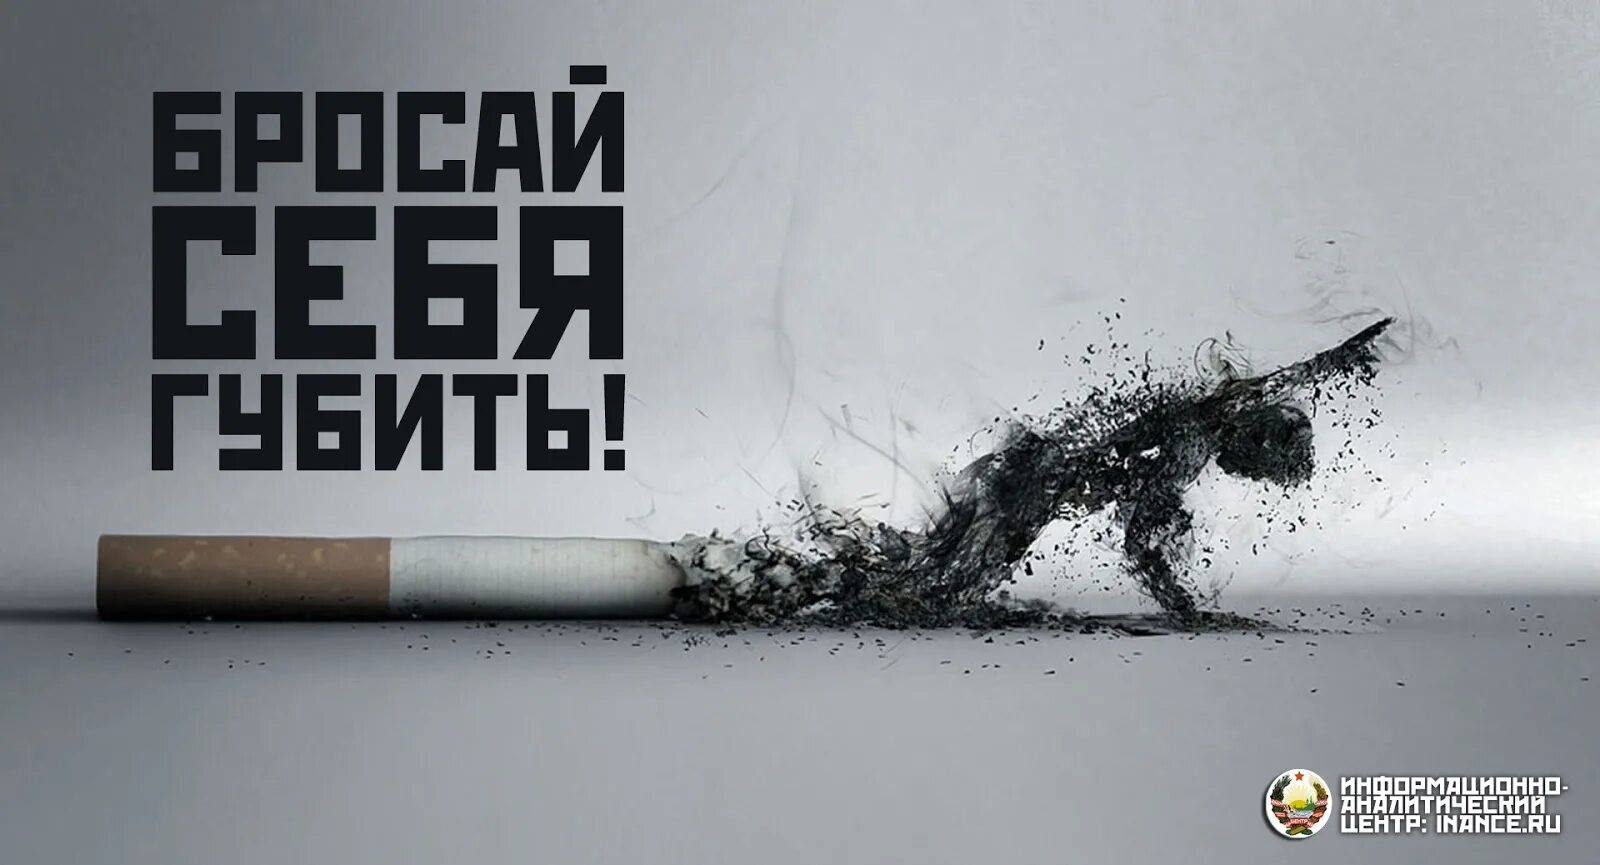 Против курения. Плакат против курения. Против сигарет. Баннер против курения.